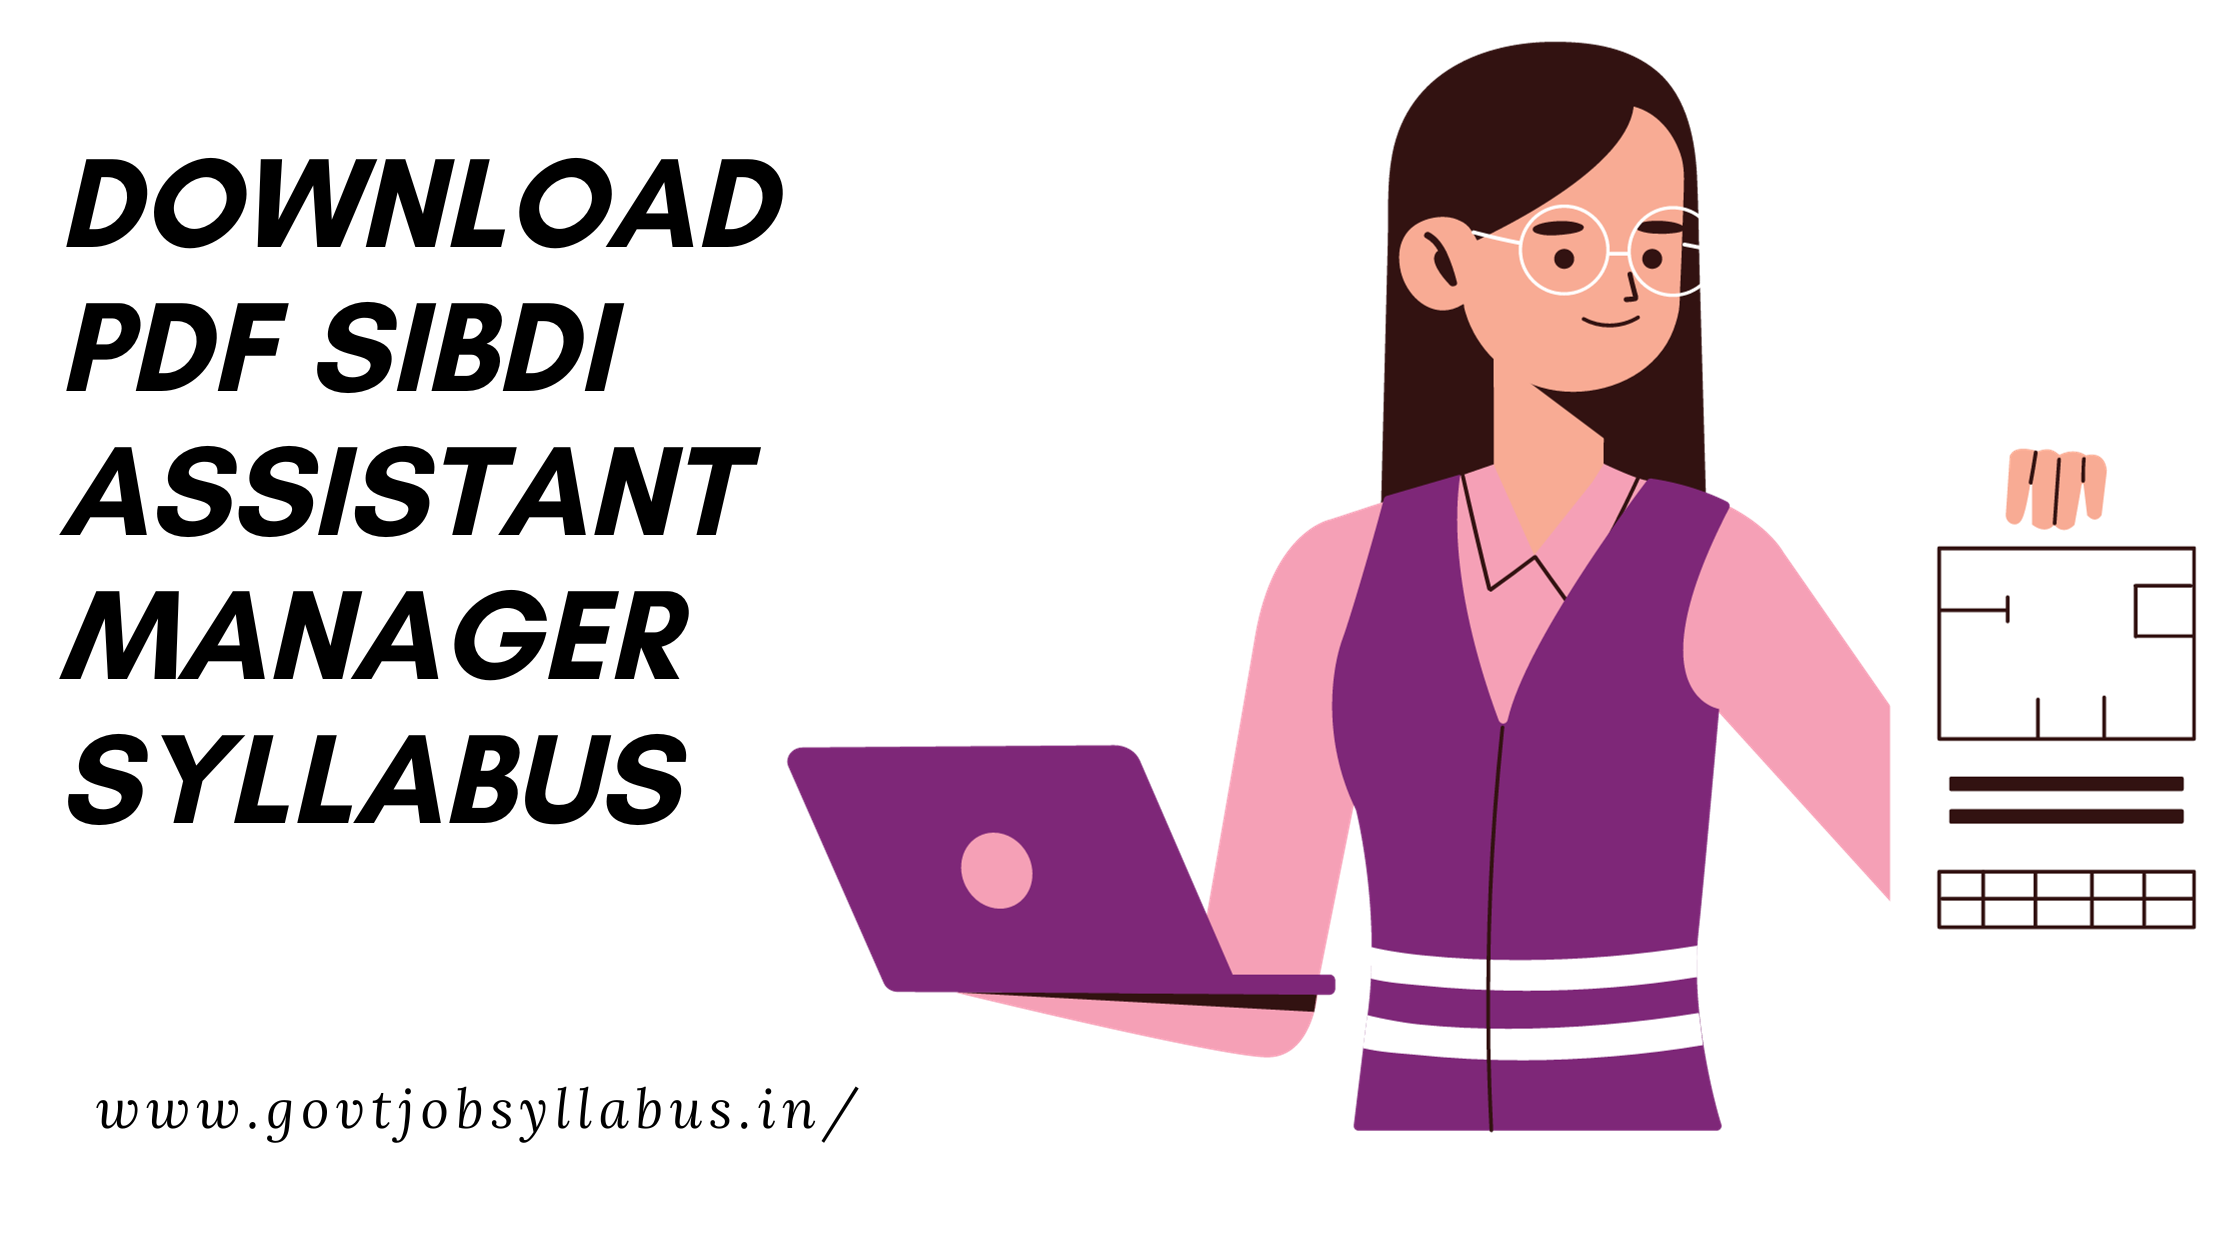 Download PDF SIBDI Assistant Manager Syllabus